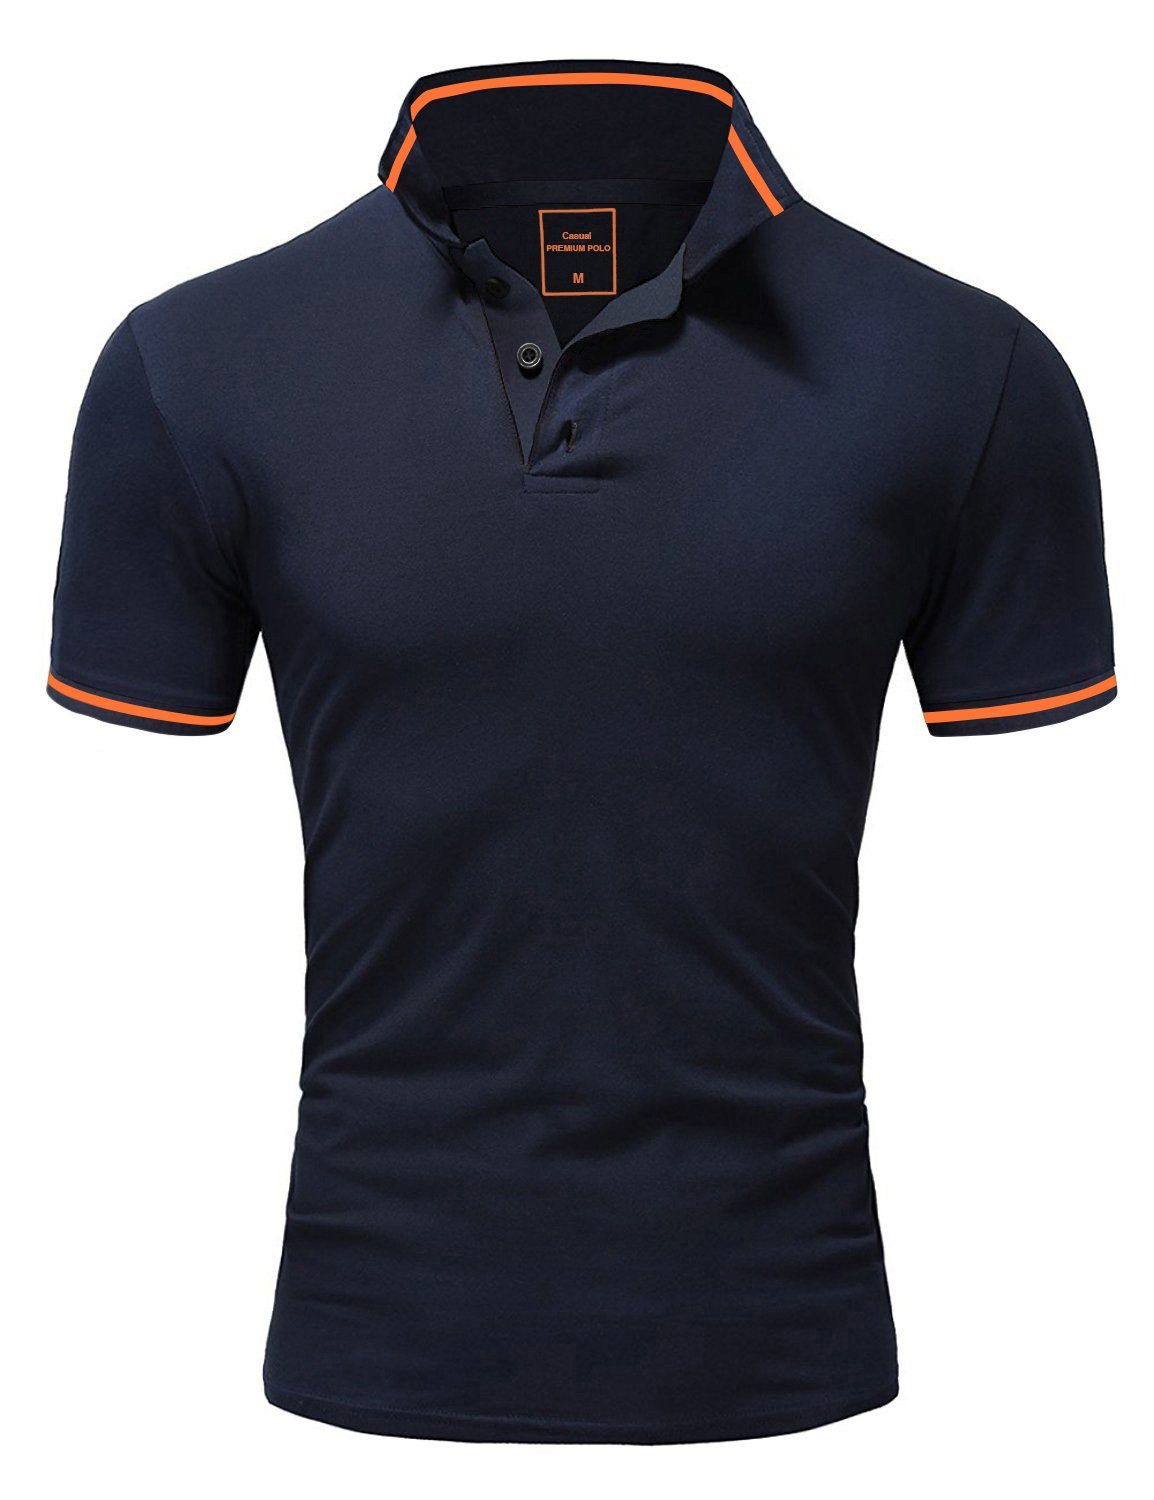 Navyblau/Orange Basic Poloshirt Kurzarm Polohemd Amaci&Sons PROVIDENCE Herren Kontrast T-Shirt